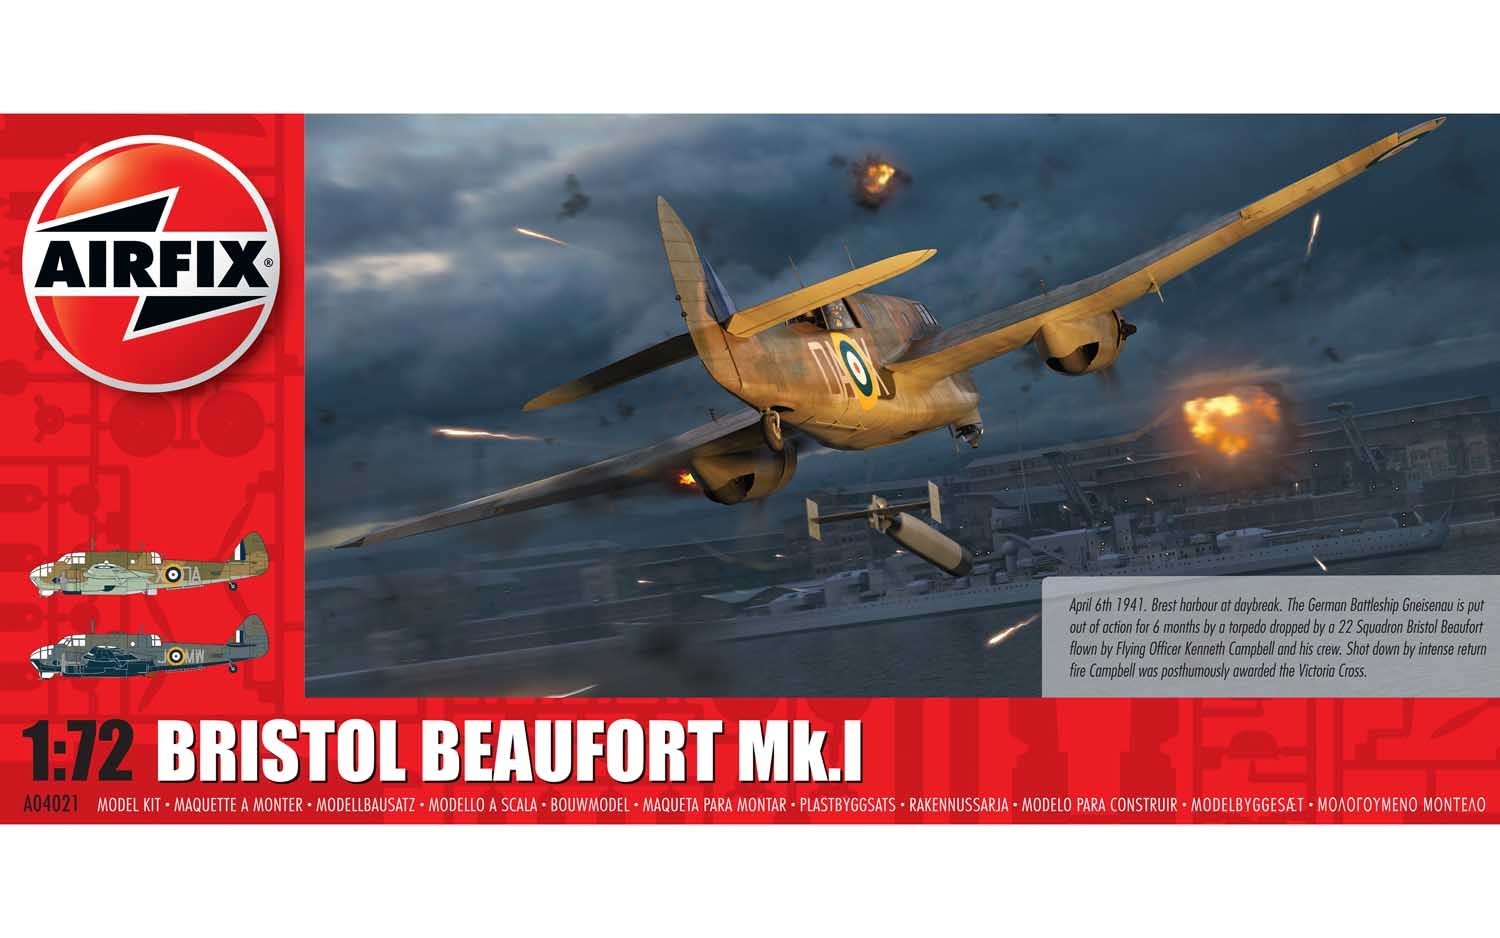 Bristol Beaufort Mk I Bomber